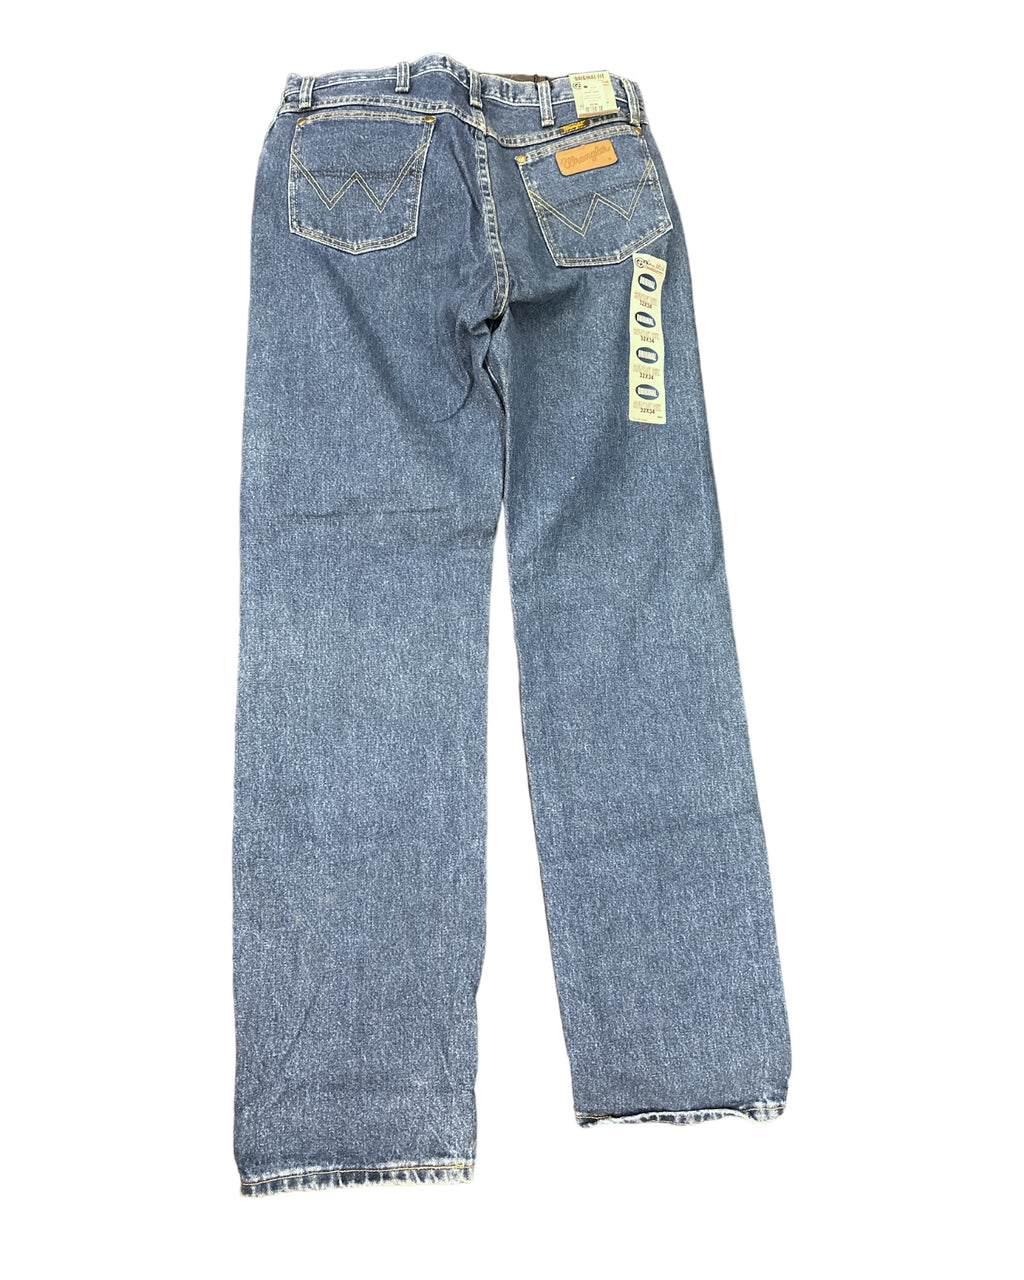 George Strait by Wrangler Straight Leg Jeans, 32